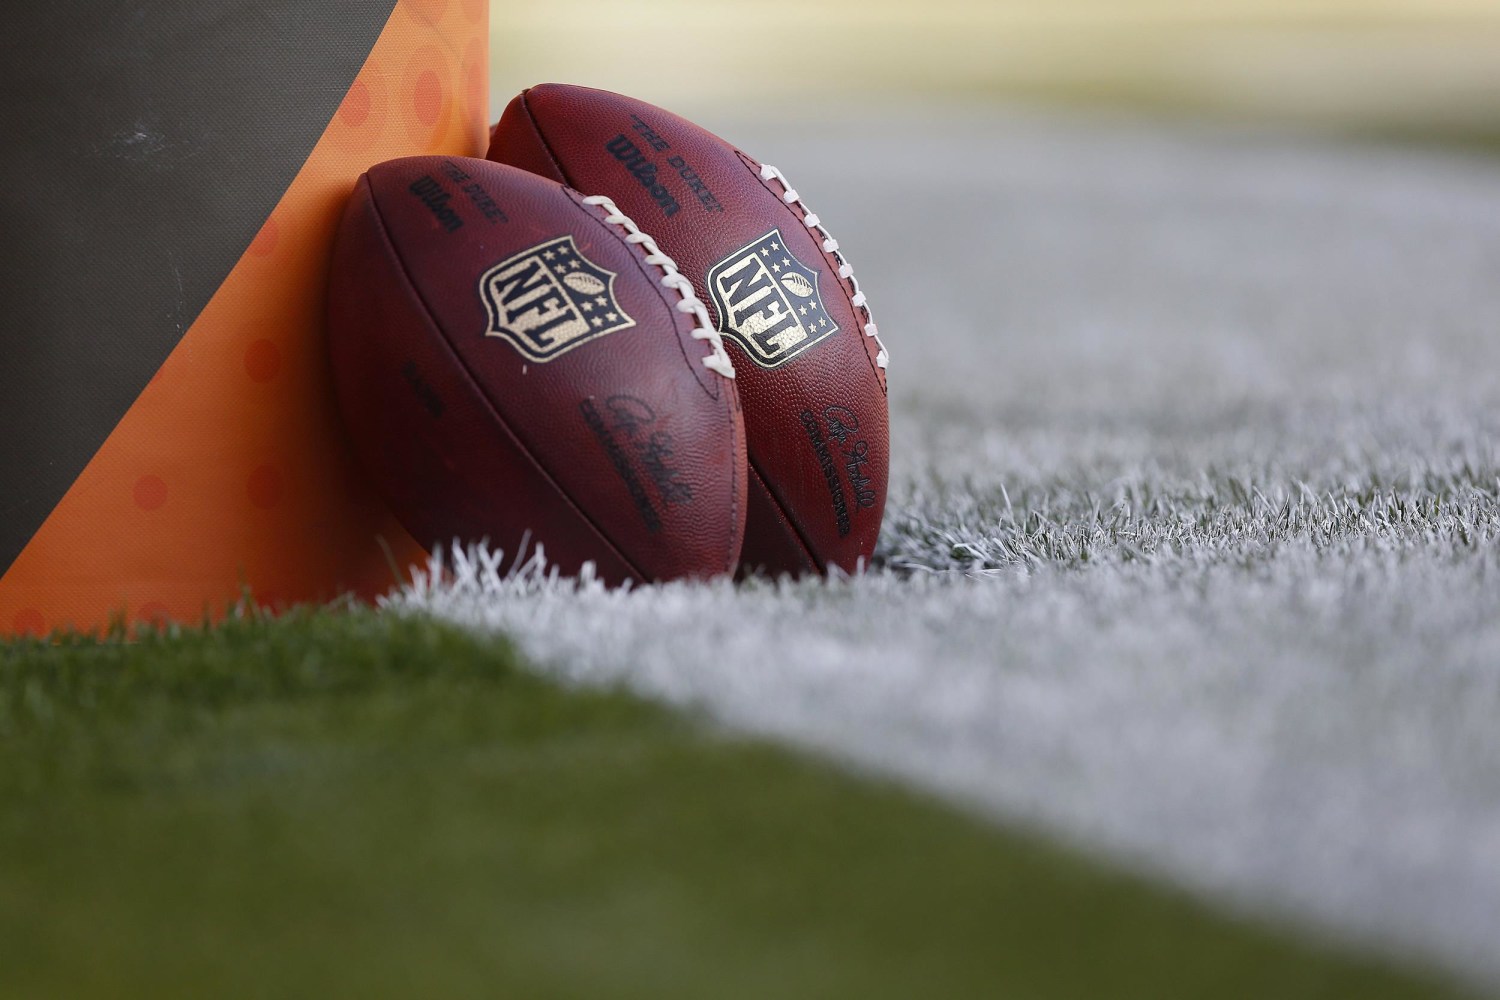 NFL Will Follow Strict Steps for Handling of Super Bowl Balls